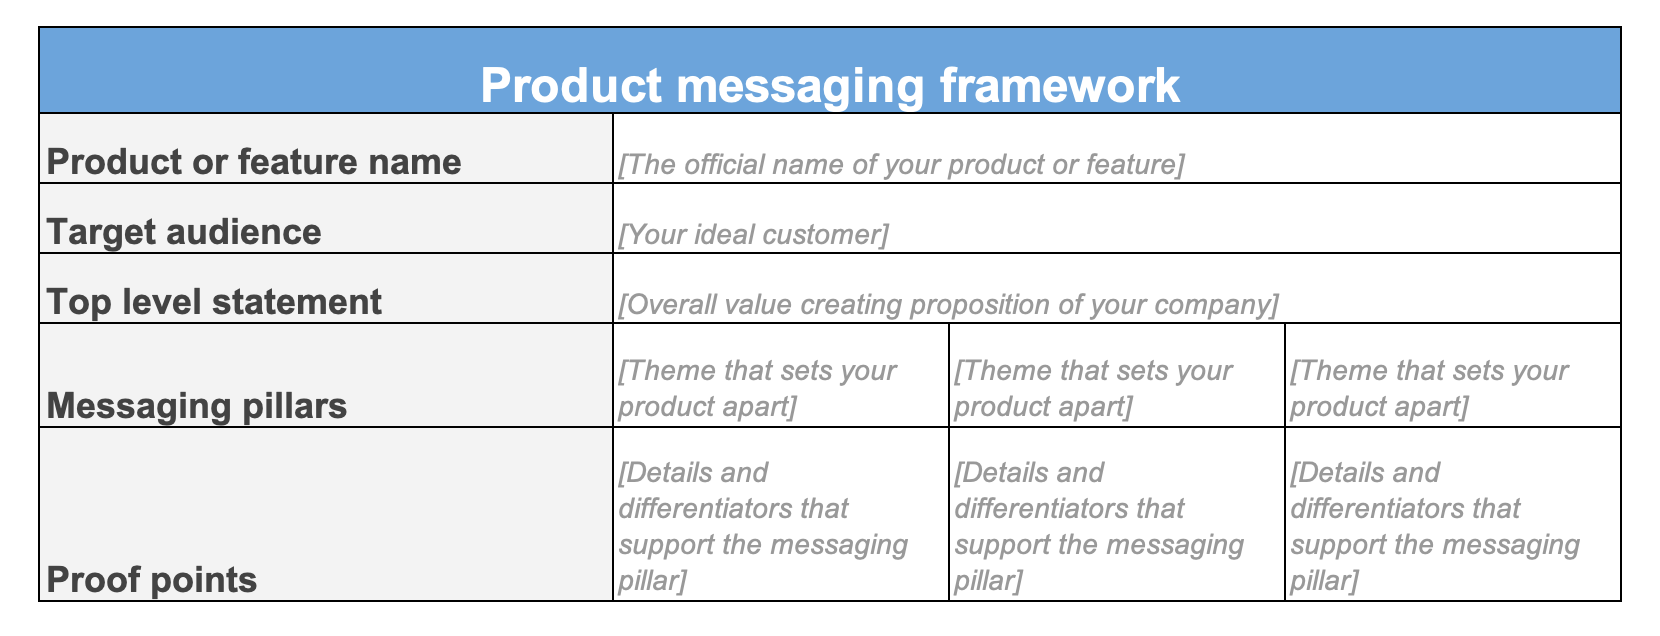 Product messaging framework